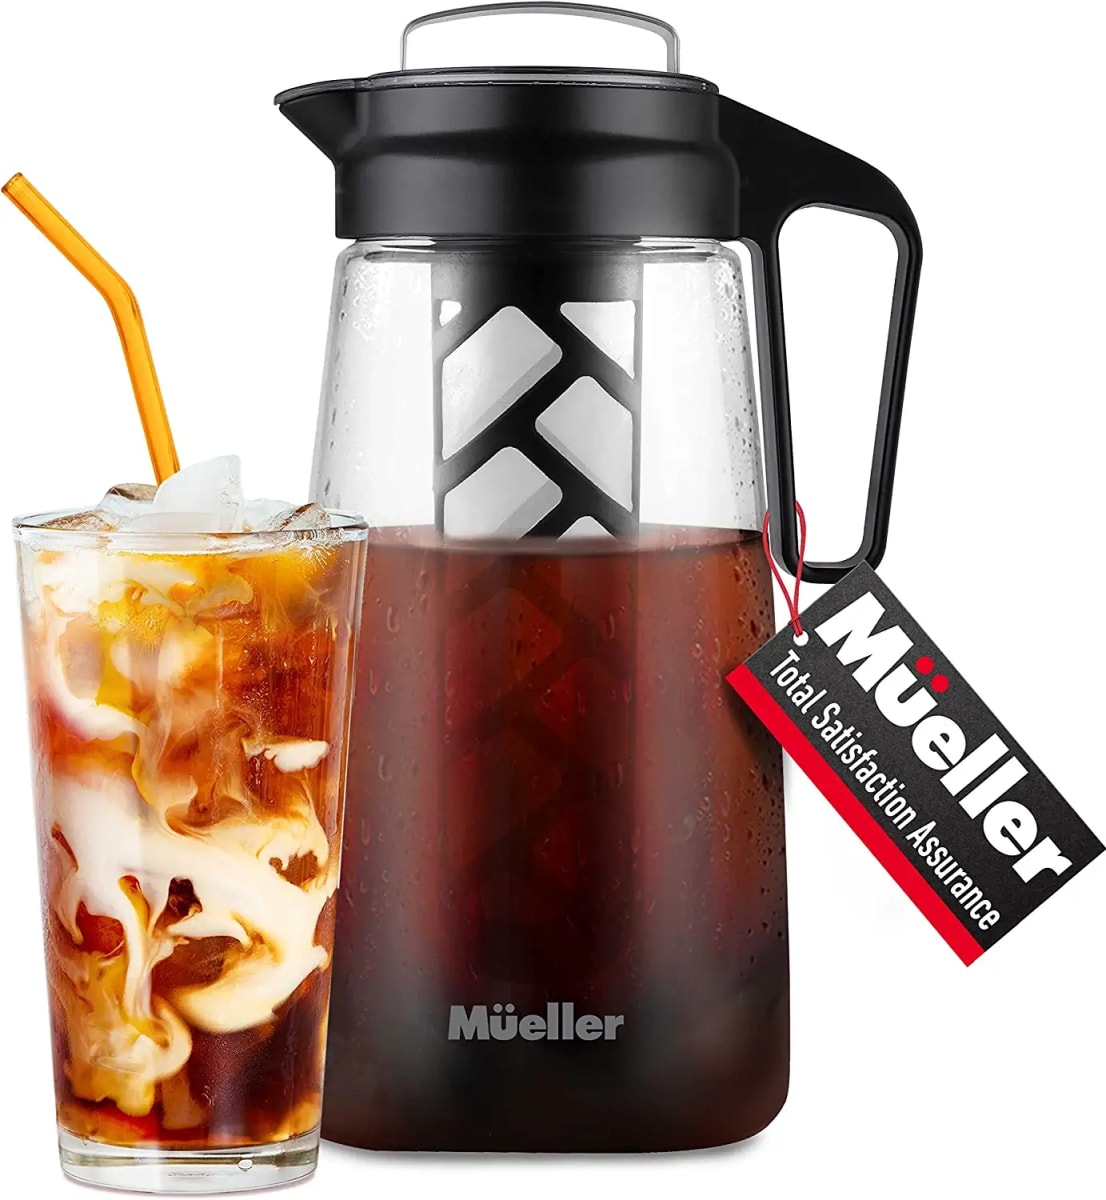 Mueller Cold Brew Coffee Maker